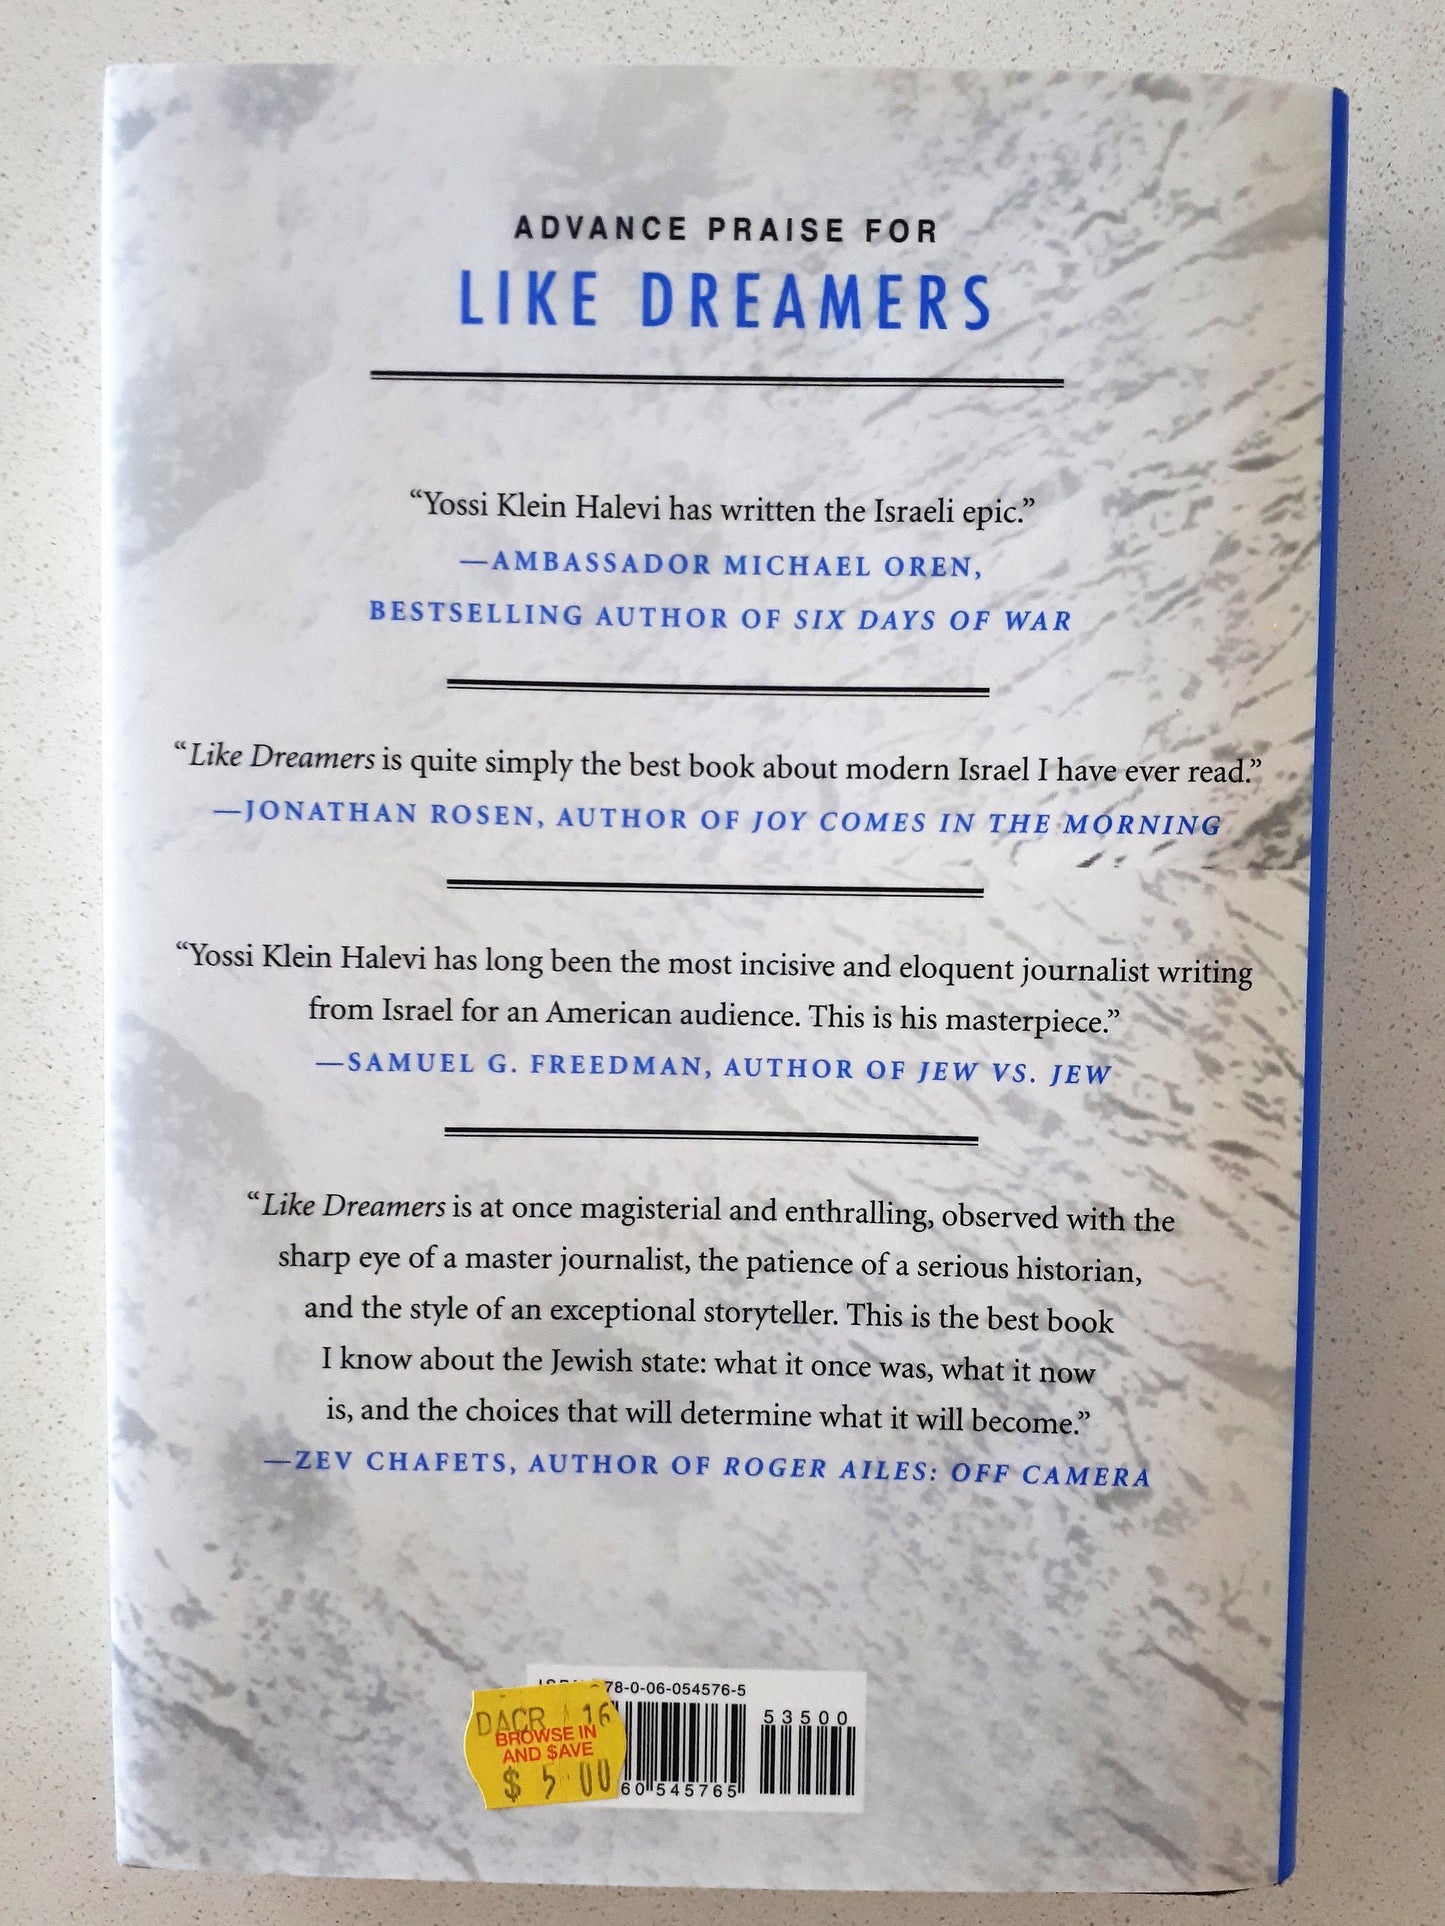 Like Dreamers by Yossi Klein Halevi